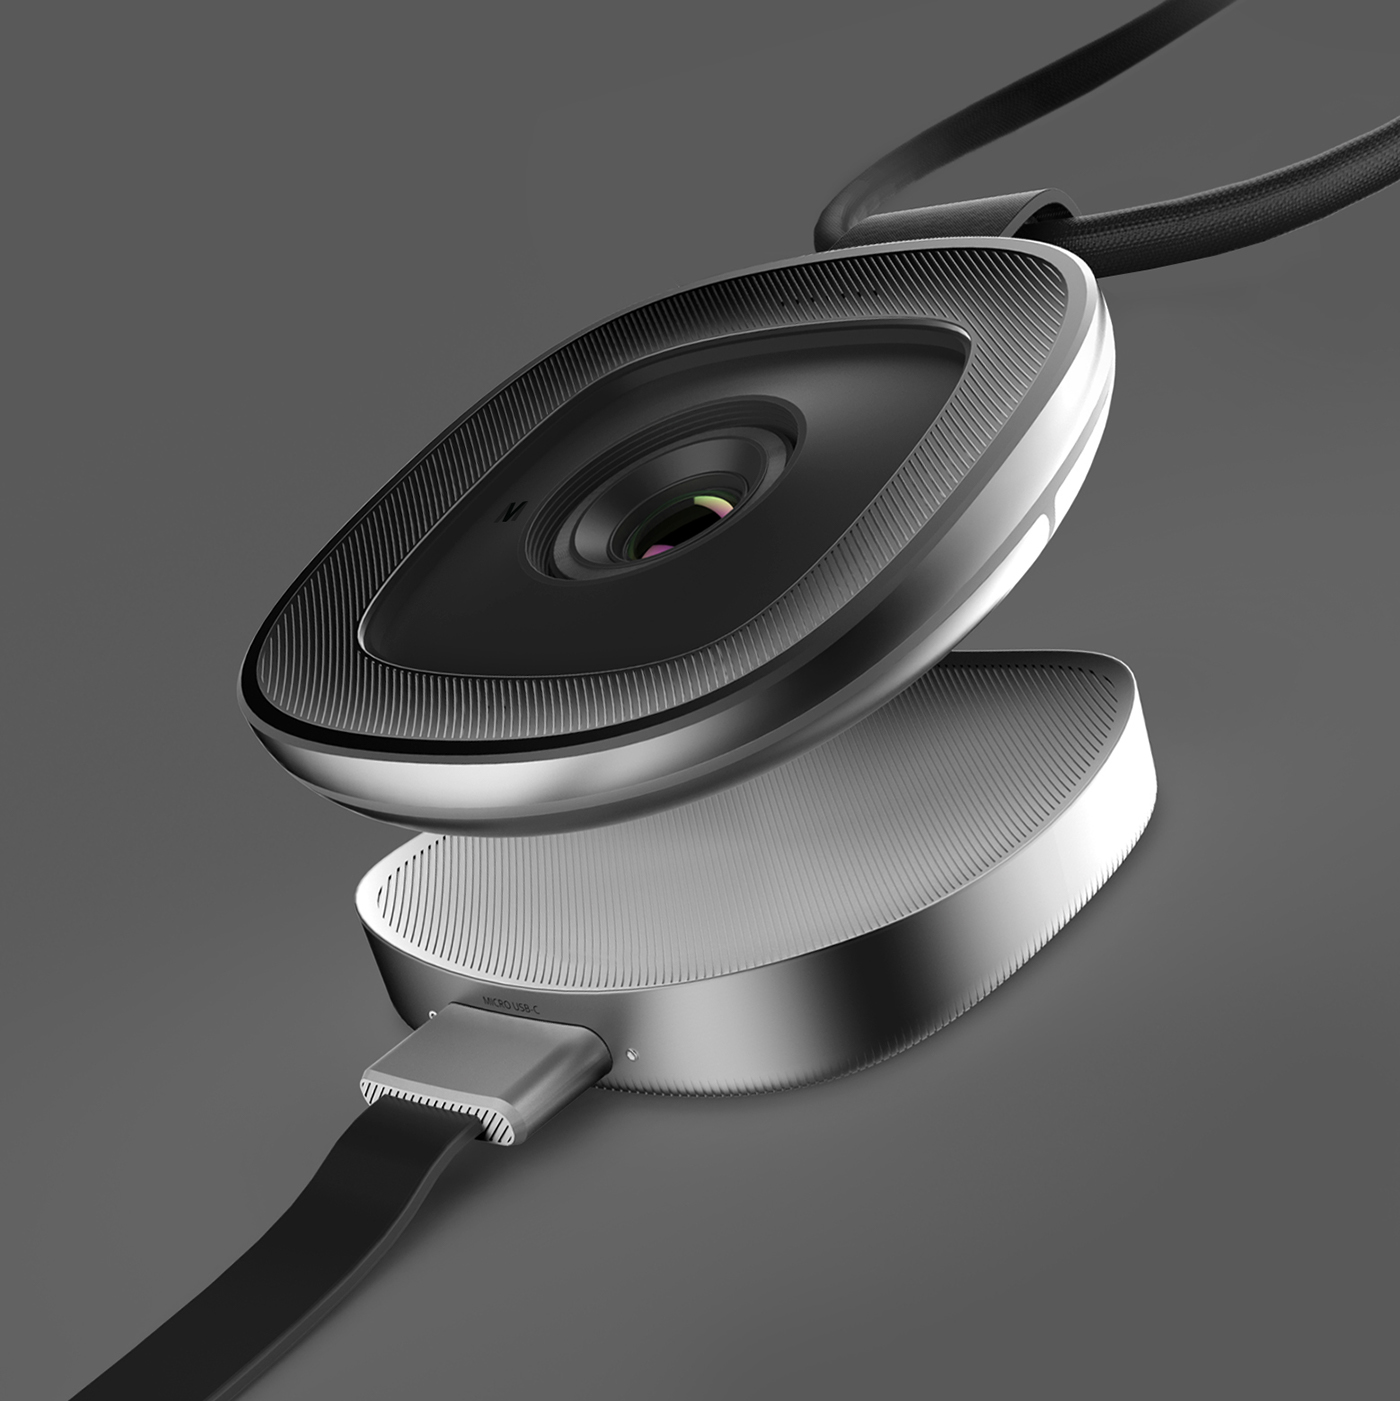 Wearable pattern metal camera black Earbuds app Necklace gray headphones